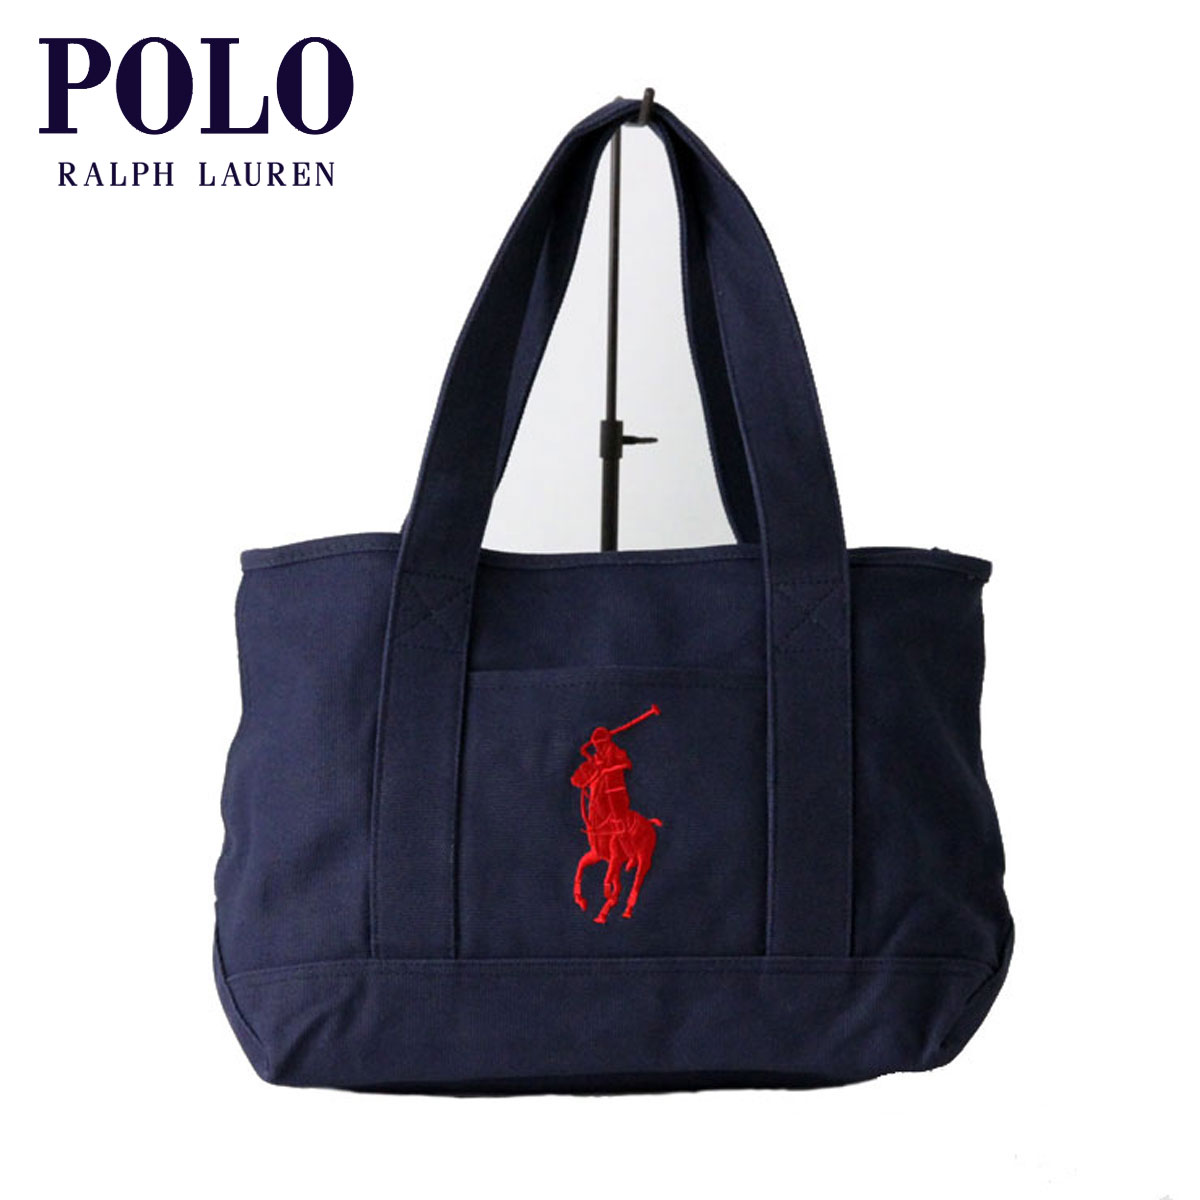 polo by ralph lauren sale